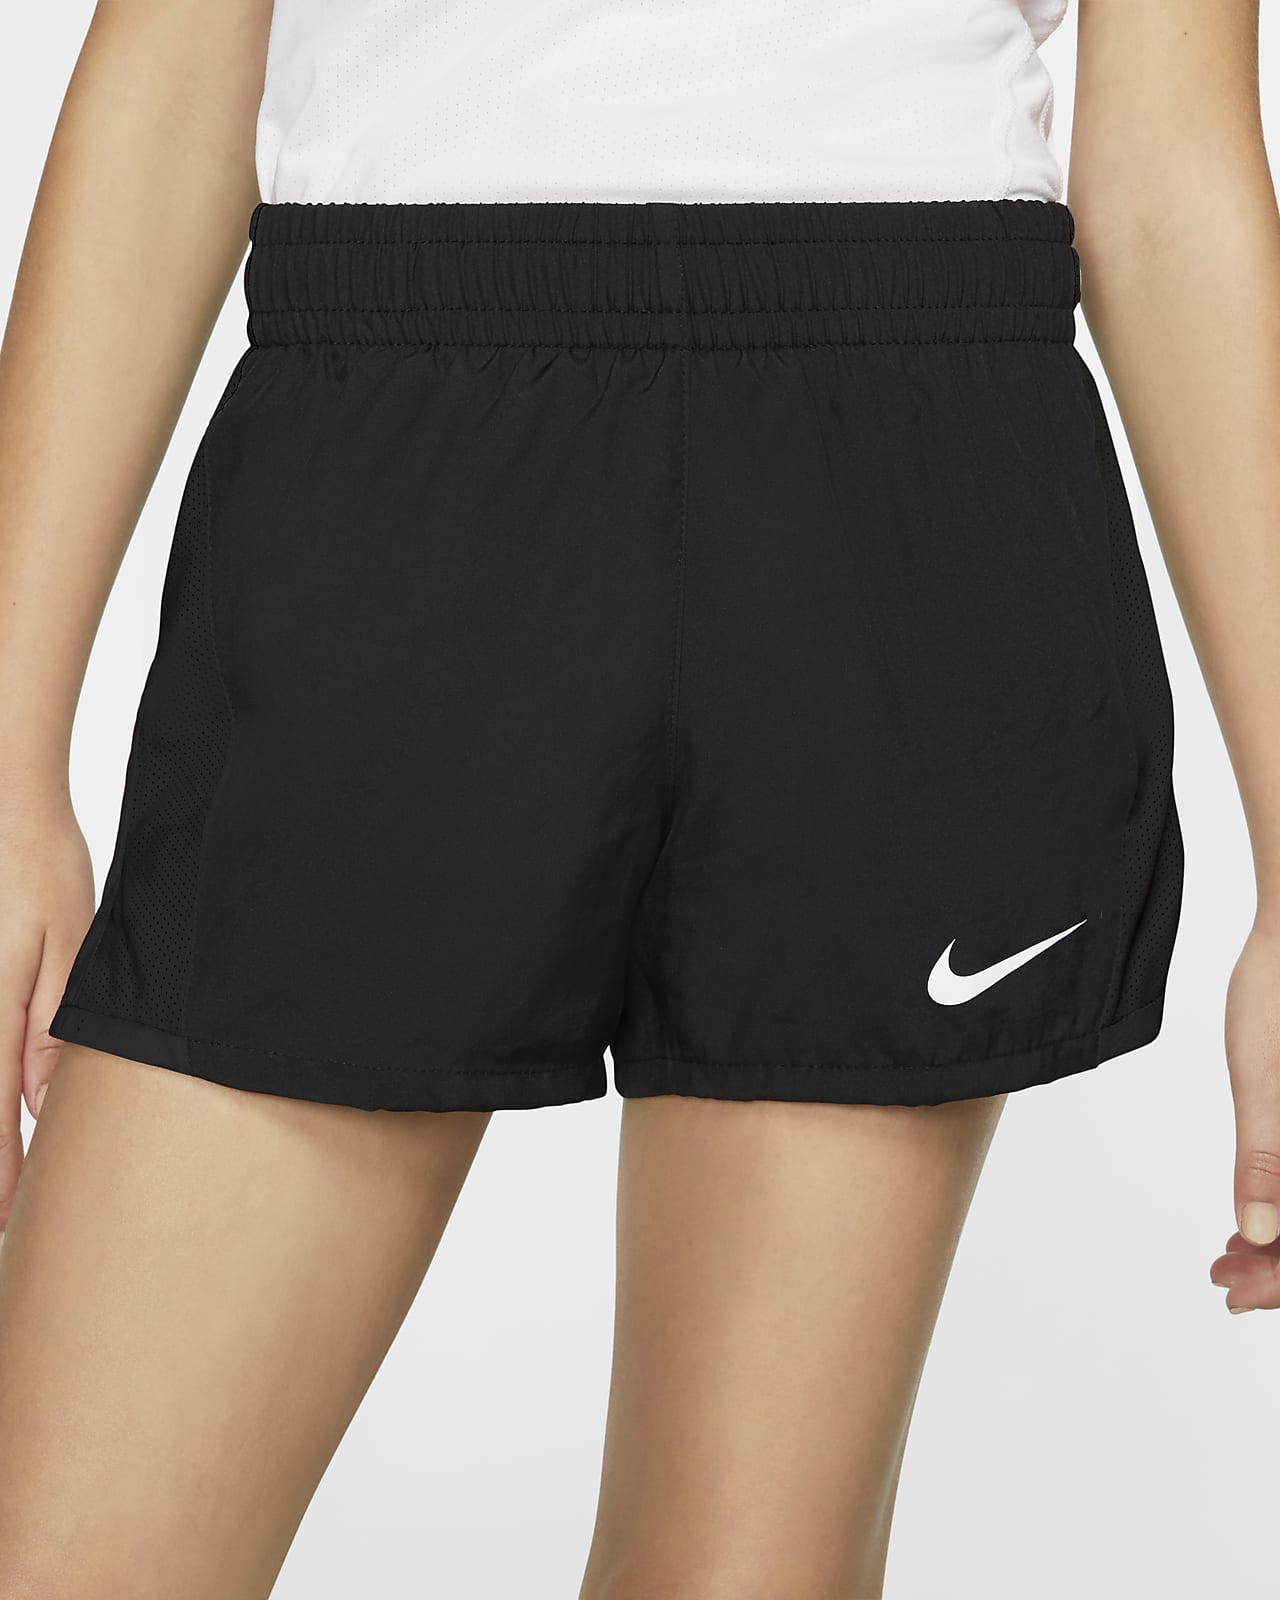 Nike Older Kids' (Girls') 3.5" (9cm approx.) Running Shorts